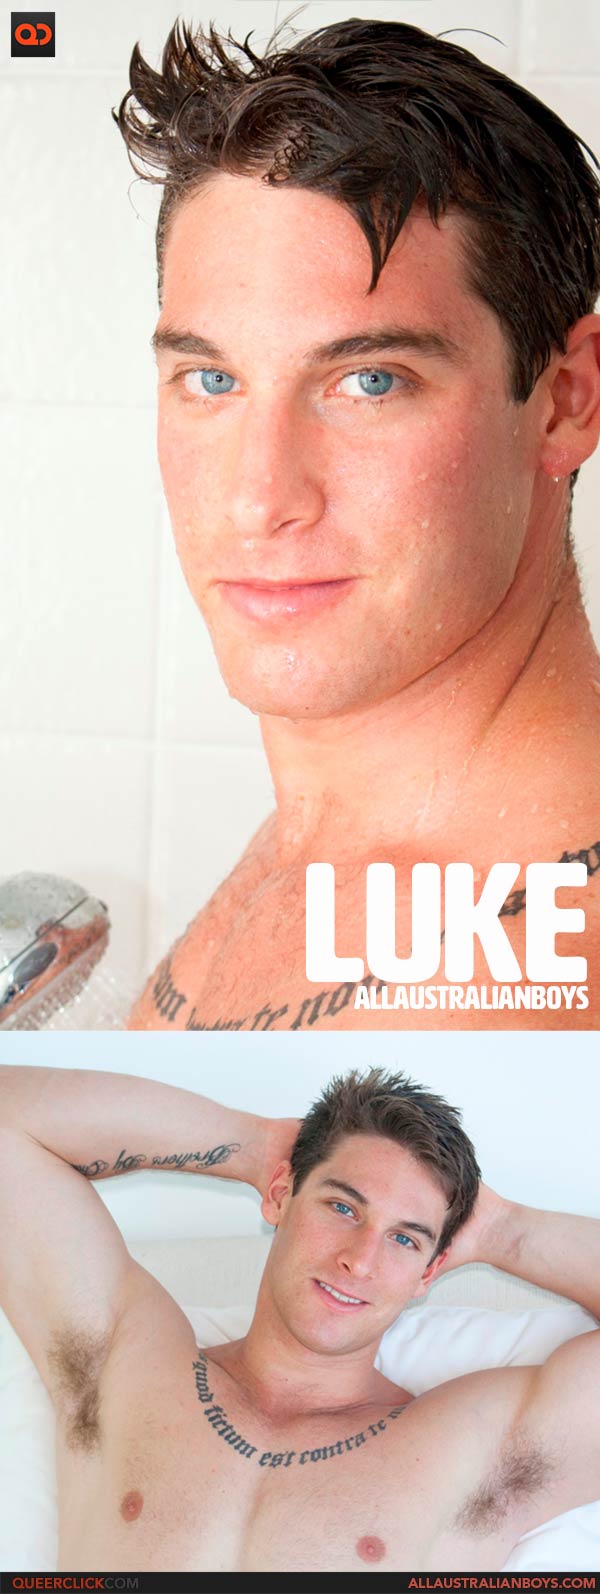 All Australian Boys: Luke